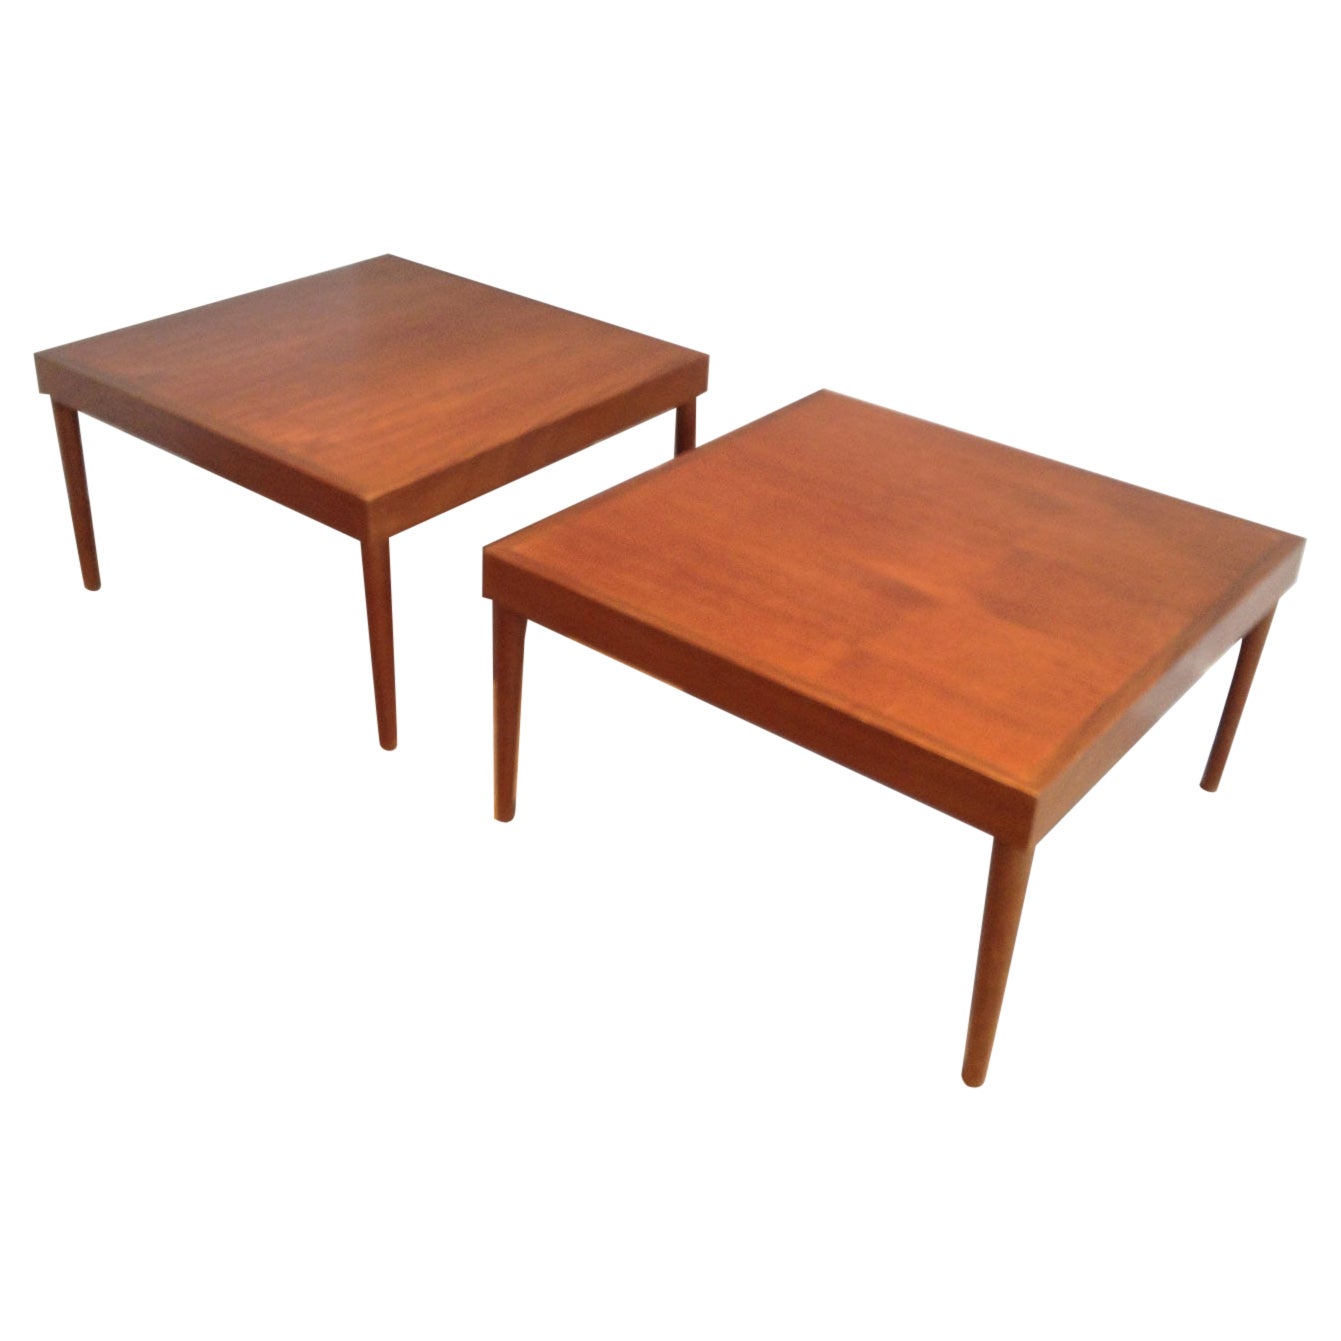 Pair of Scandinavian Wooden Side Tables. Circa 1960